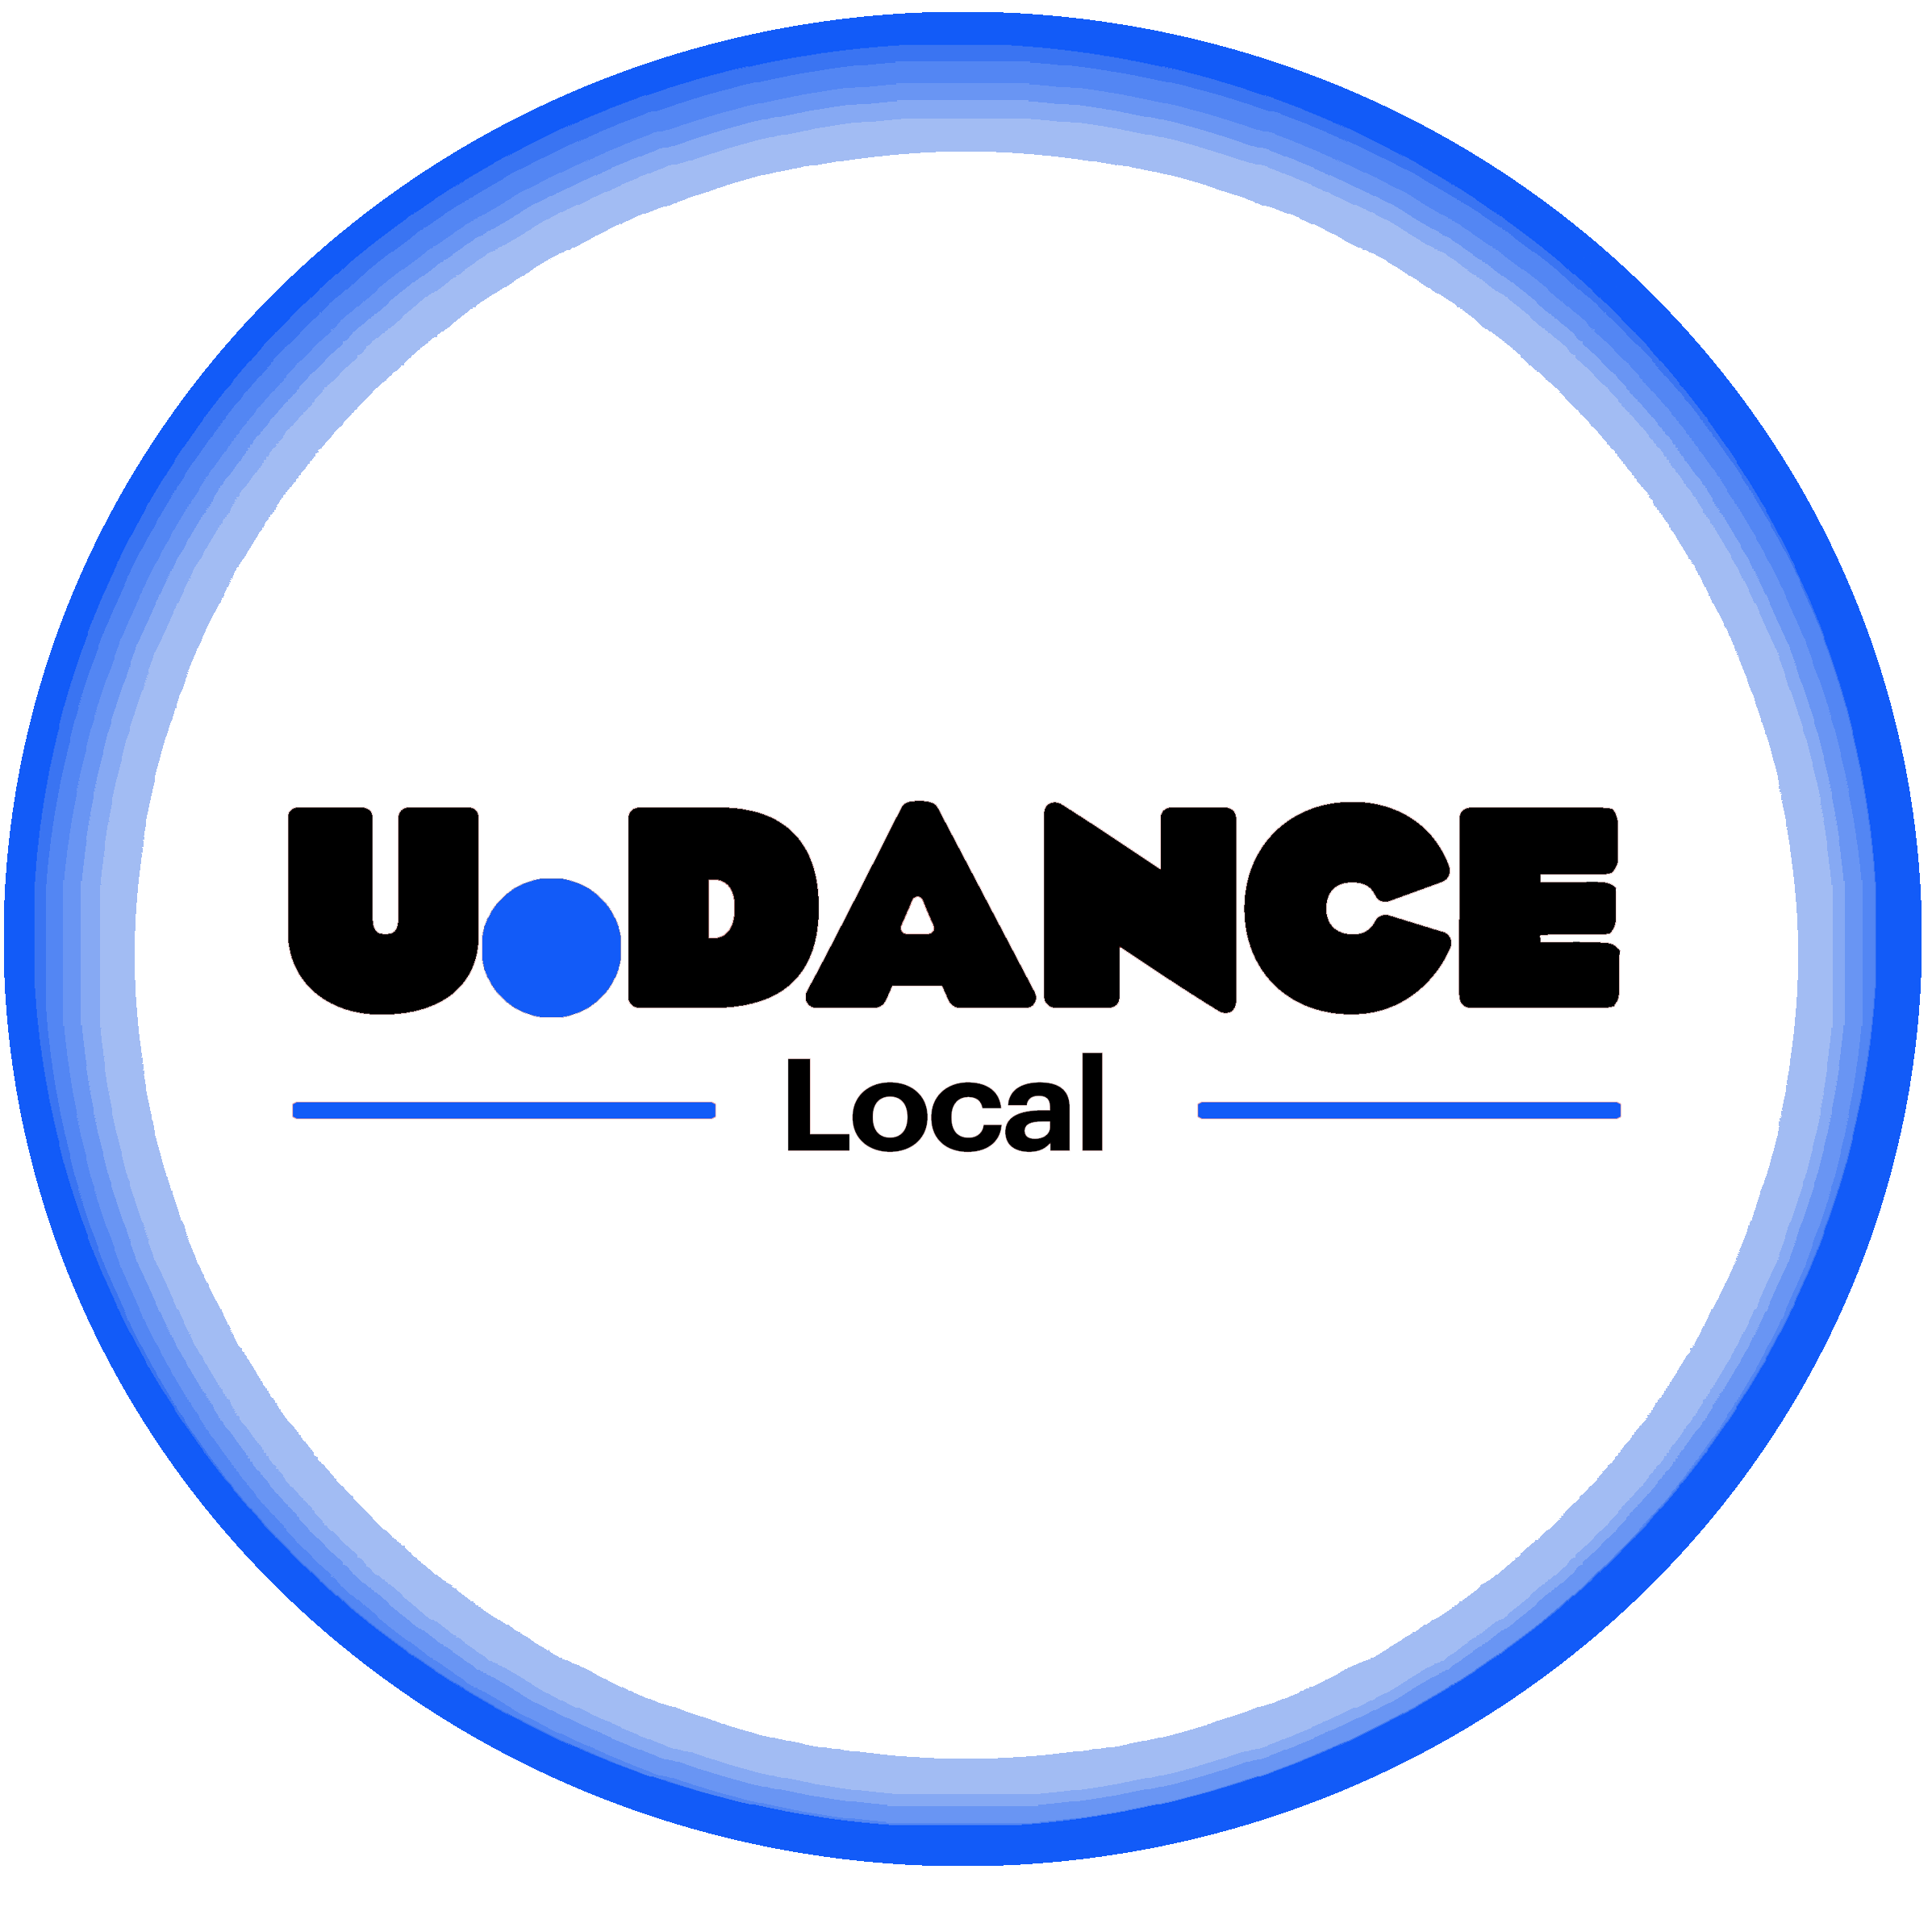 U.Dance Local Logo Circular Badge